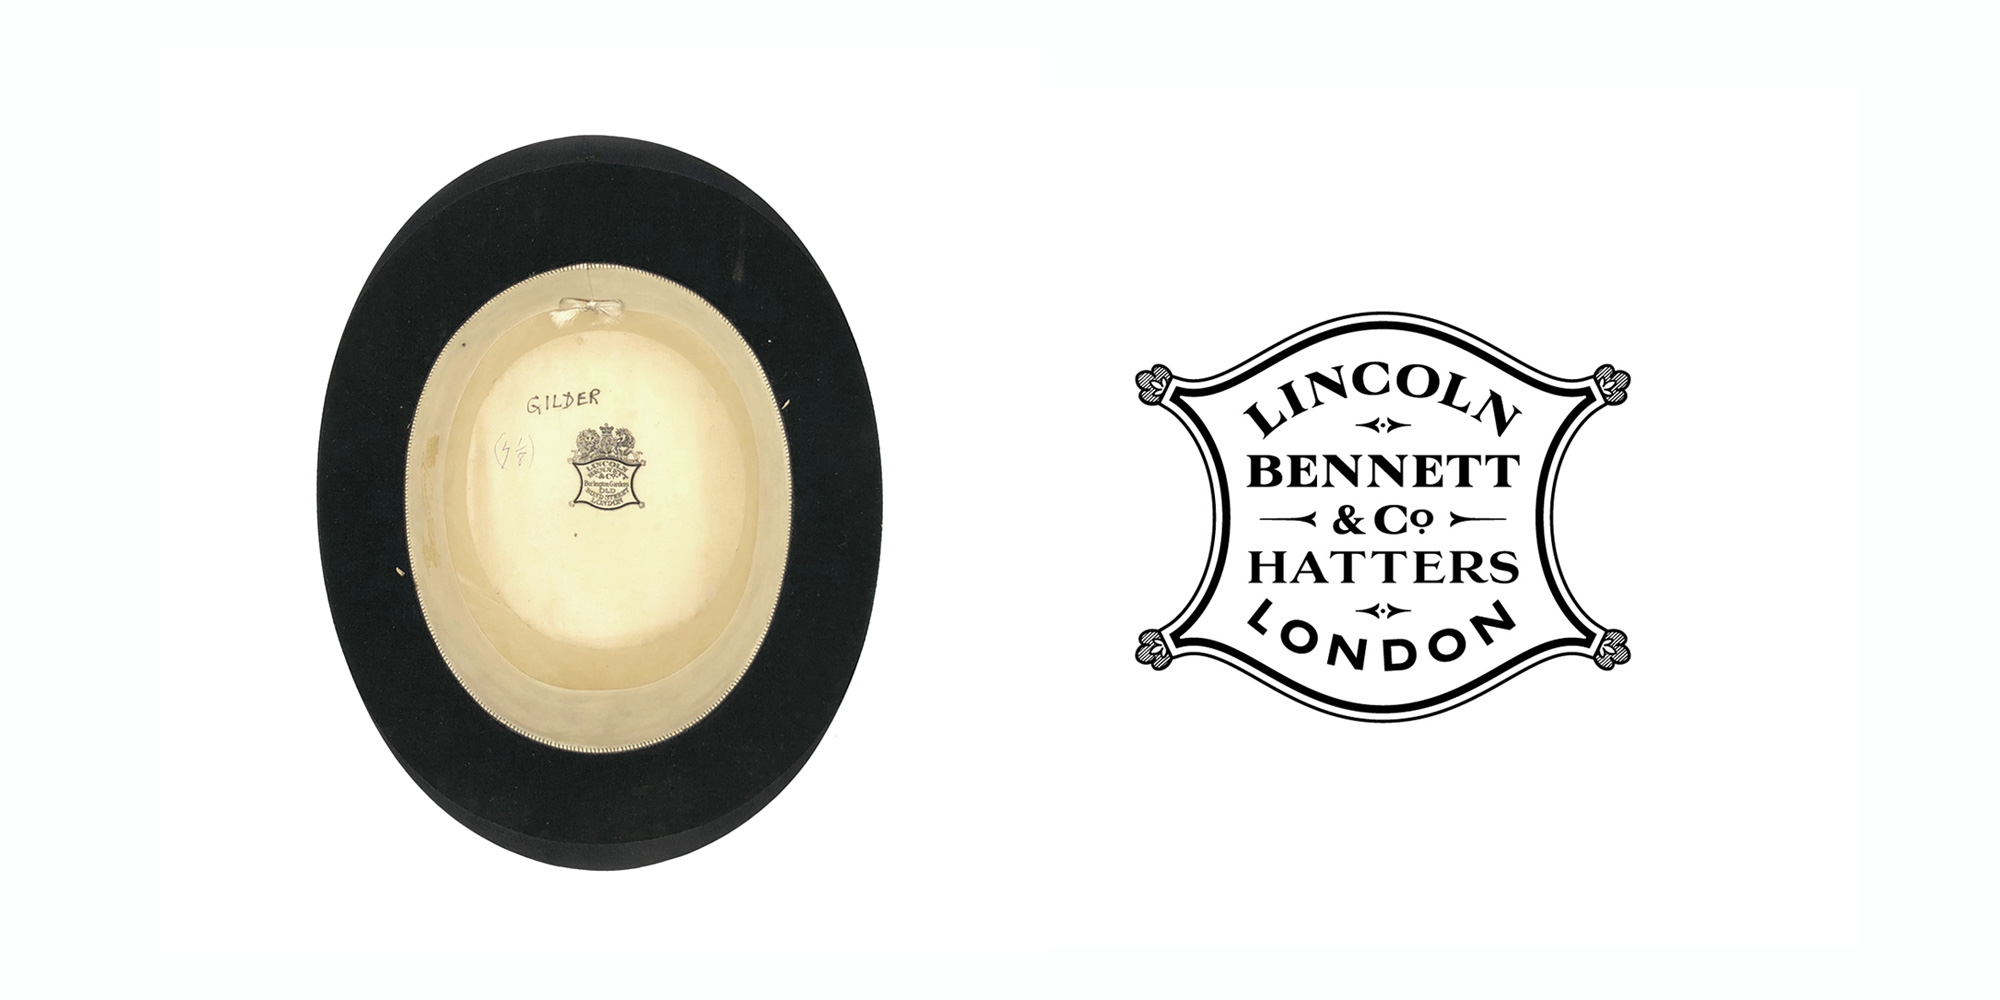 Vintage Lincoln Bennett hat